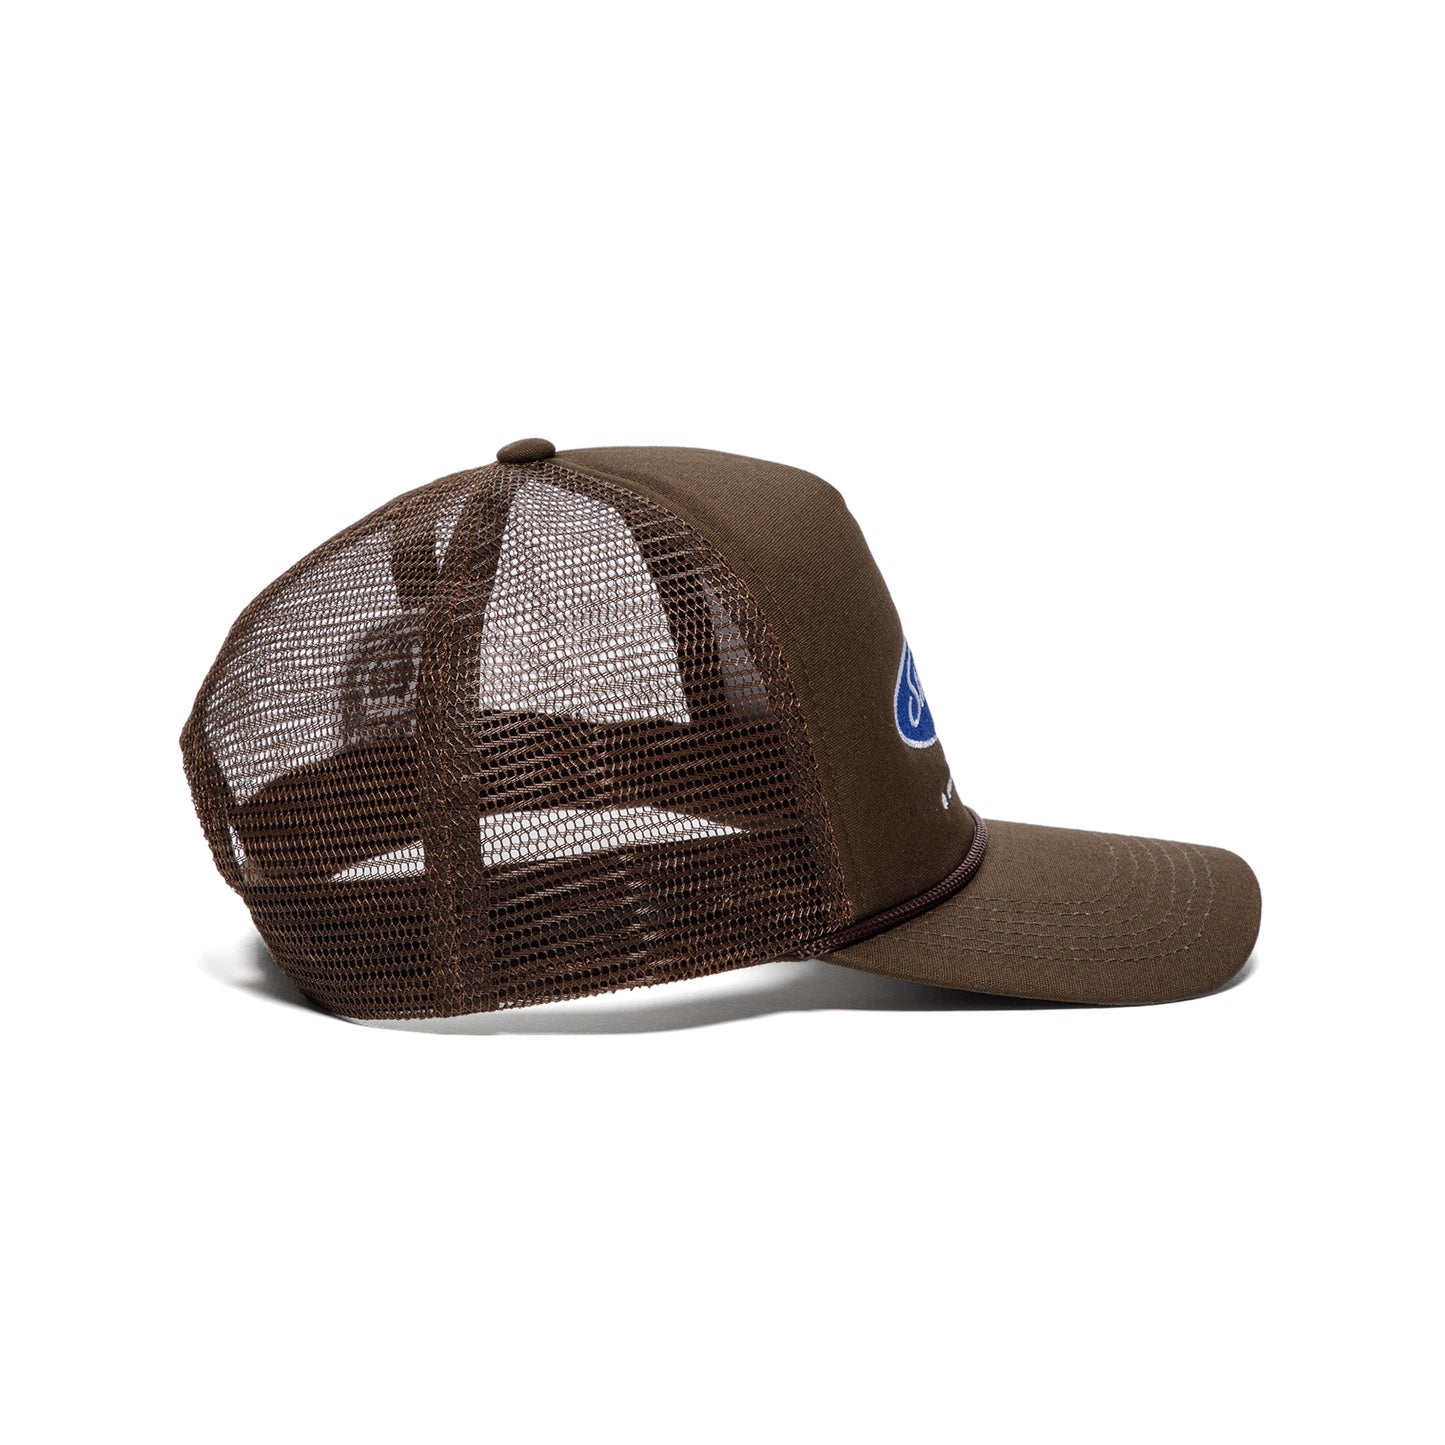 Stingwater Konbini Cowgirl Trucker Hat (Brown)